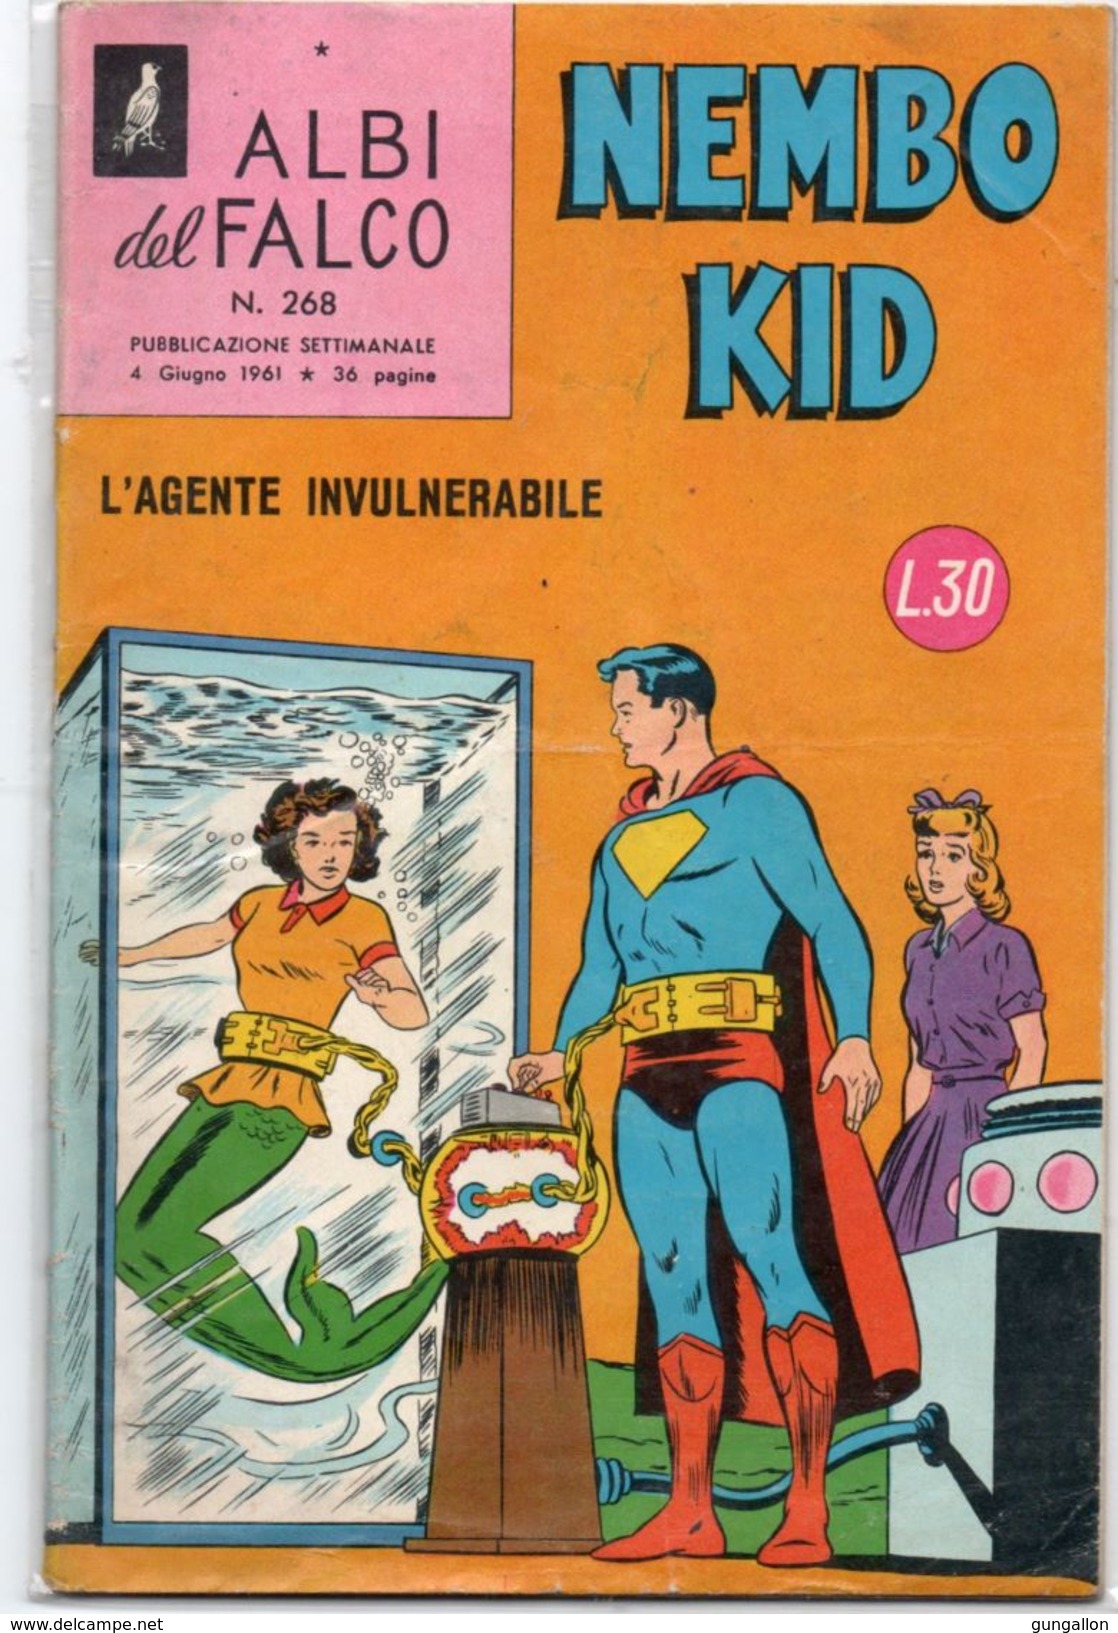 Albi Del Falco "Nembo Kid" (Mondadori 1961) N. 268 - Super Eroi